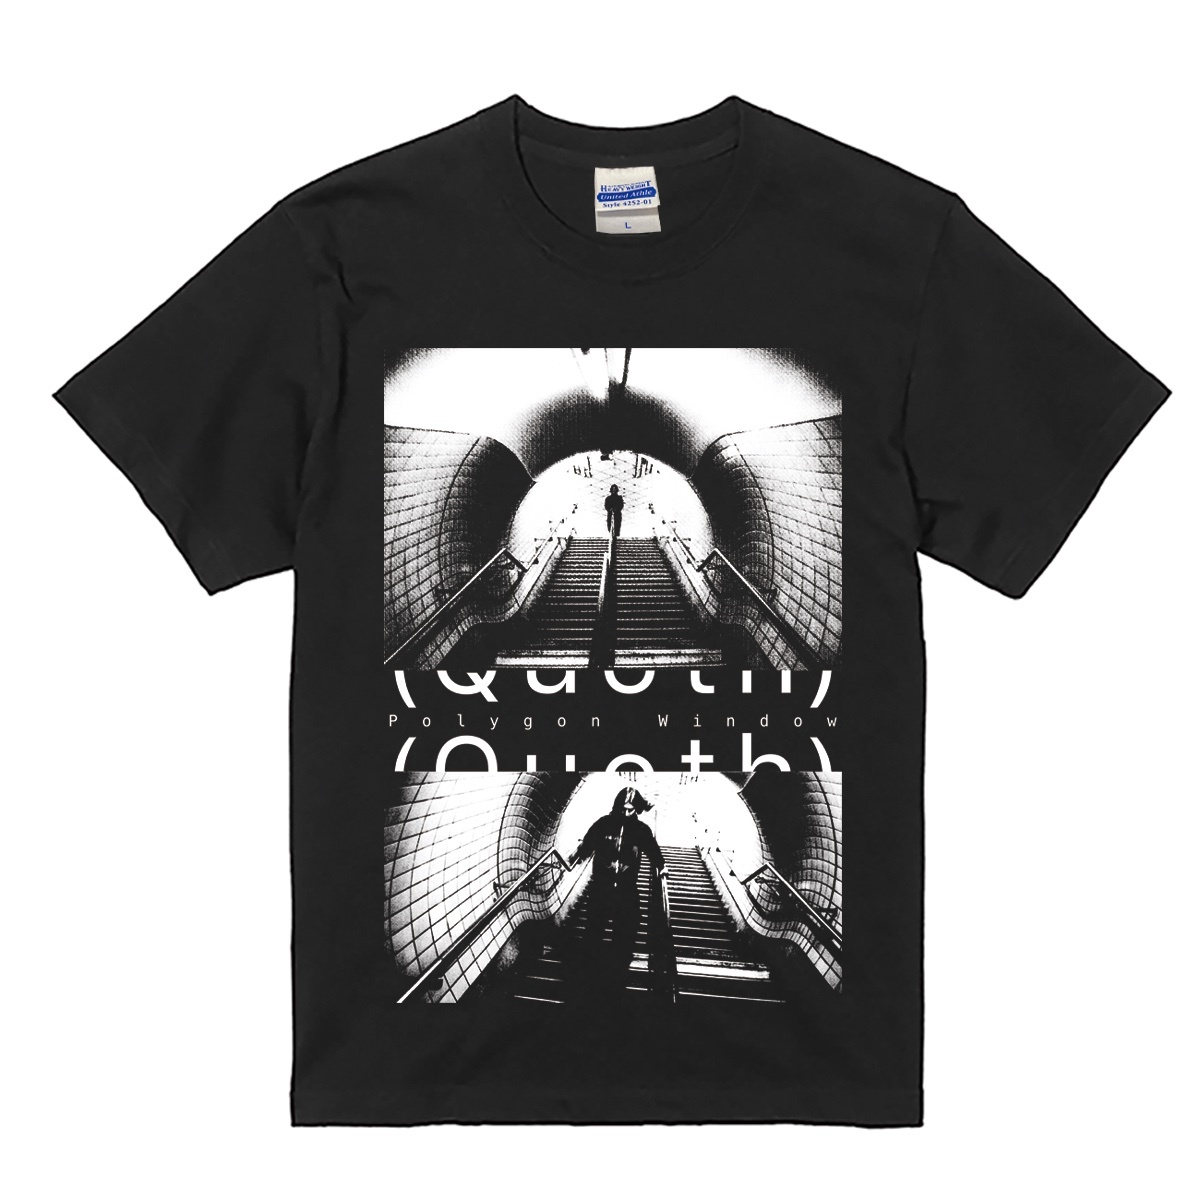 Aphex Twin Polygon Window エイフェックス・ツイン Tシャツ 黒 Lサイズ BLACK / BJORK Massive Attack